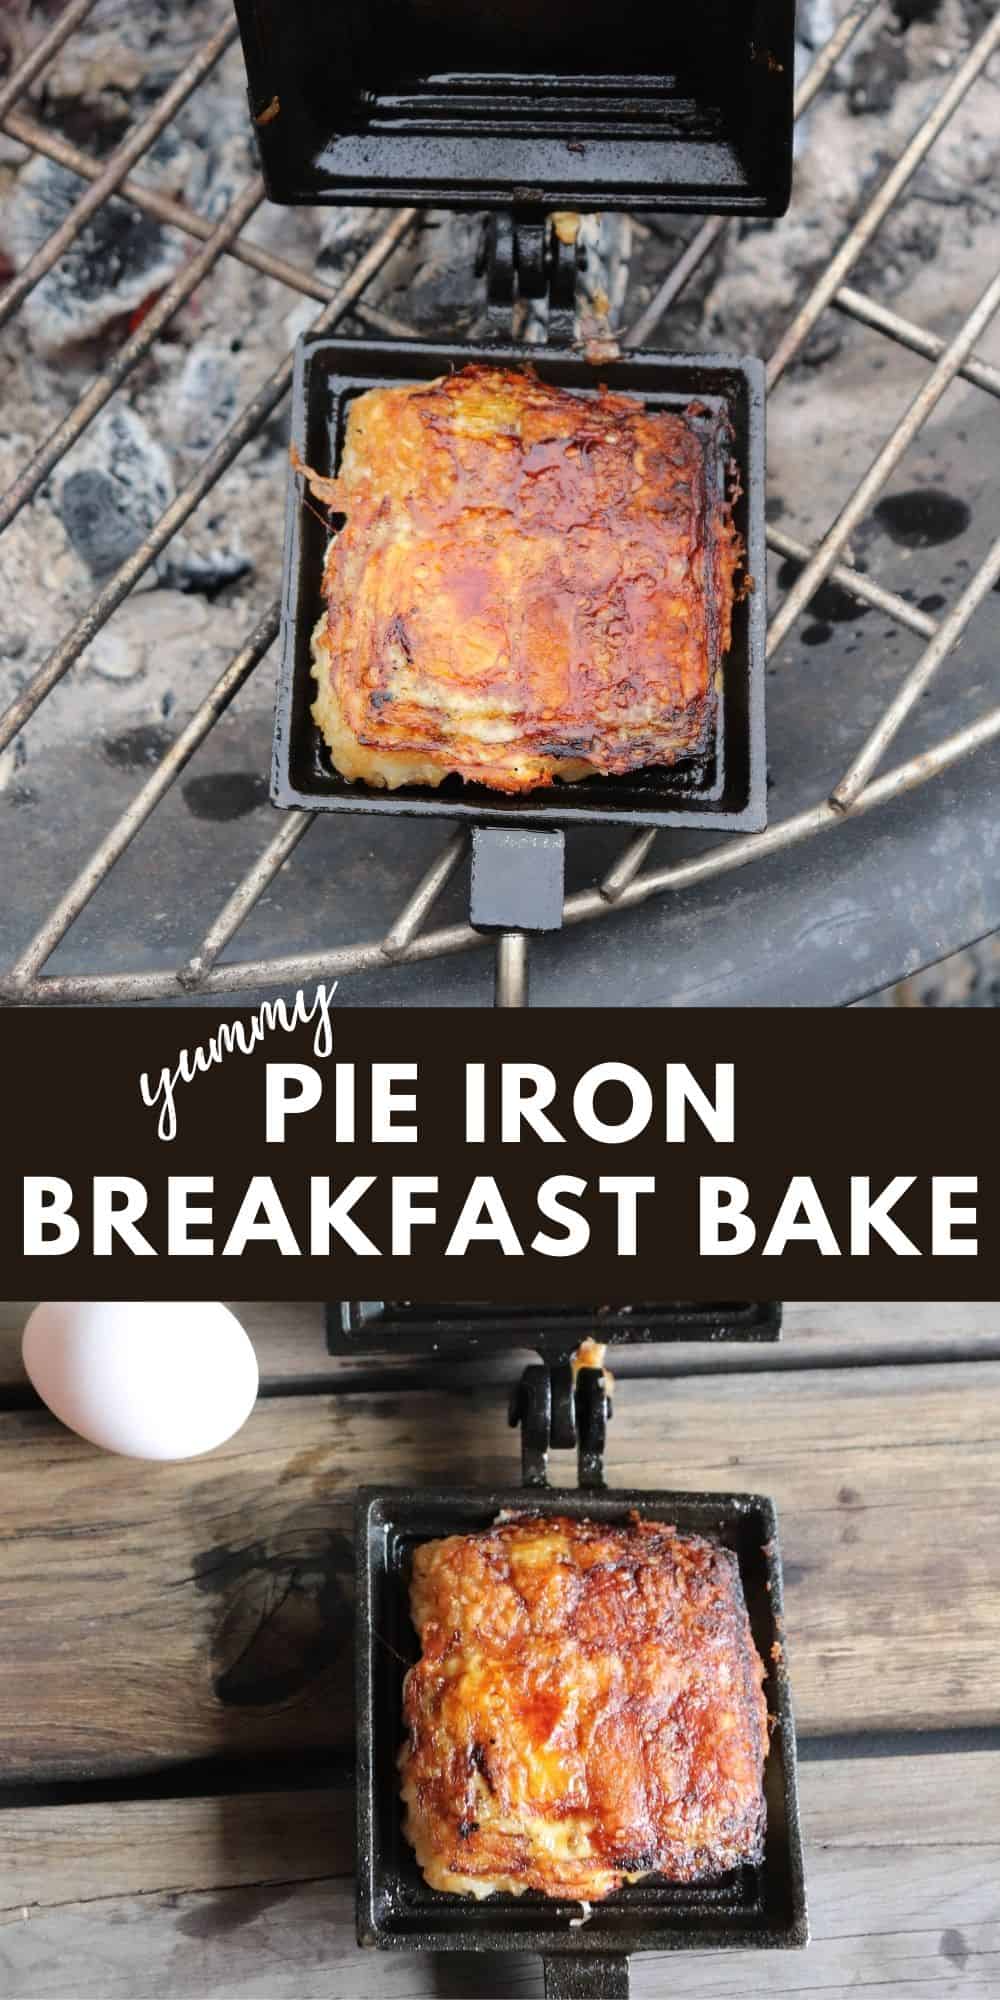 https://campfirefoodie.com/wp-content/uploads/2021/03/Pie-Iron-Breakfast-Bake14.jpg